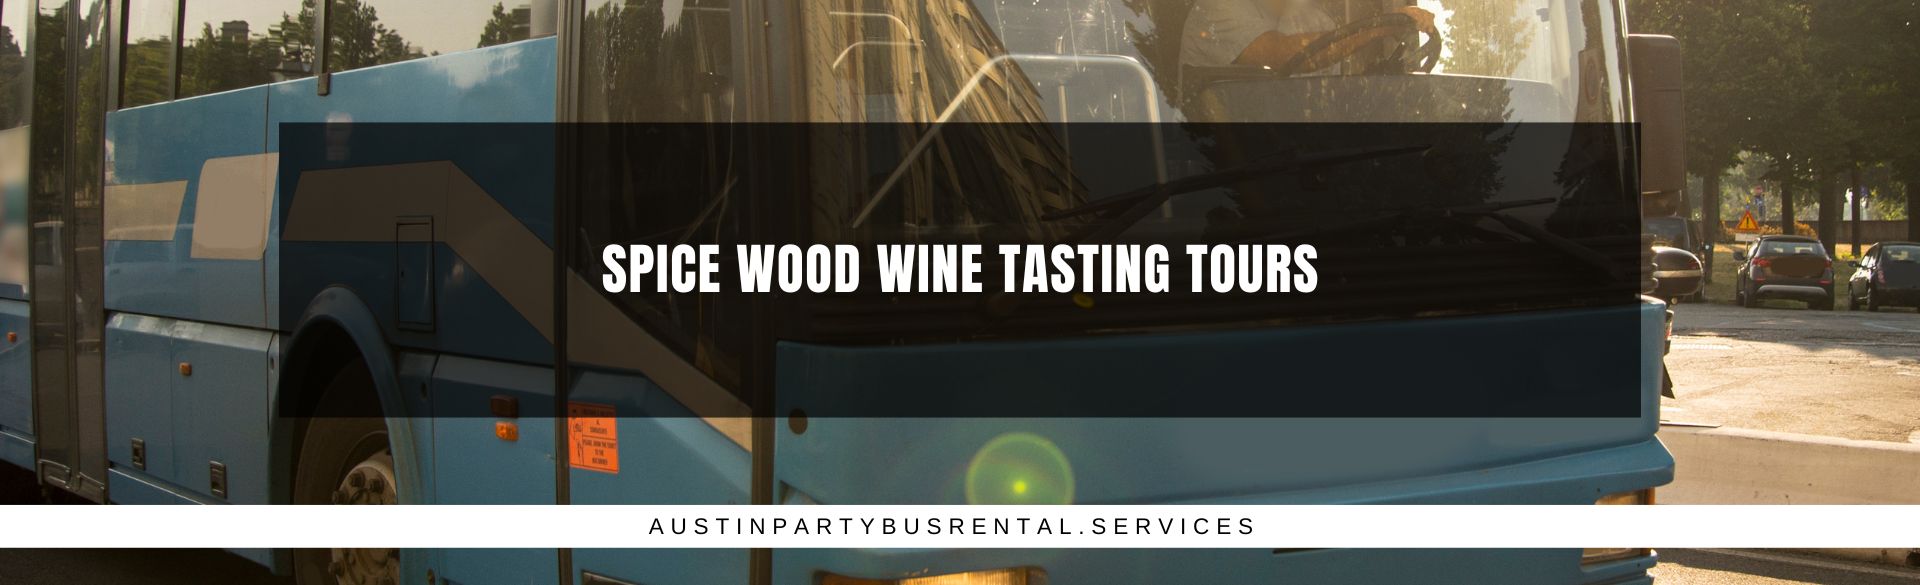 Spice Wood Wine Tasting Tours